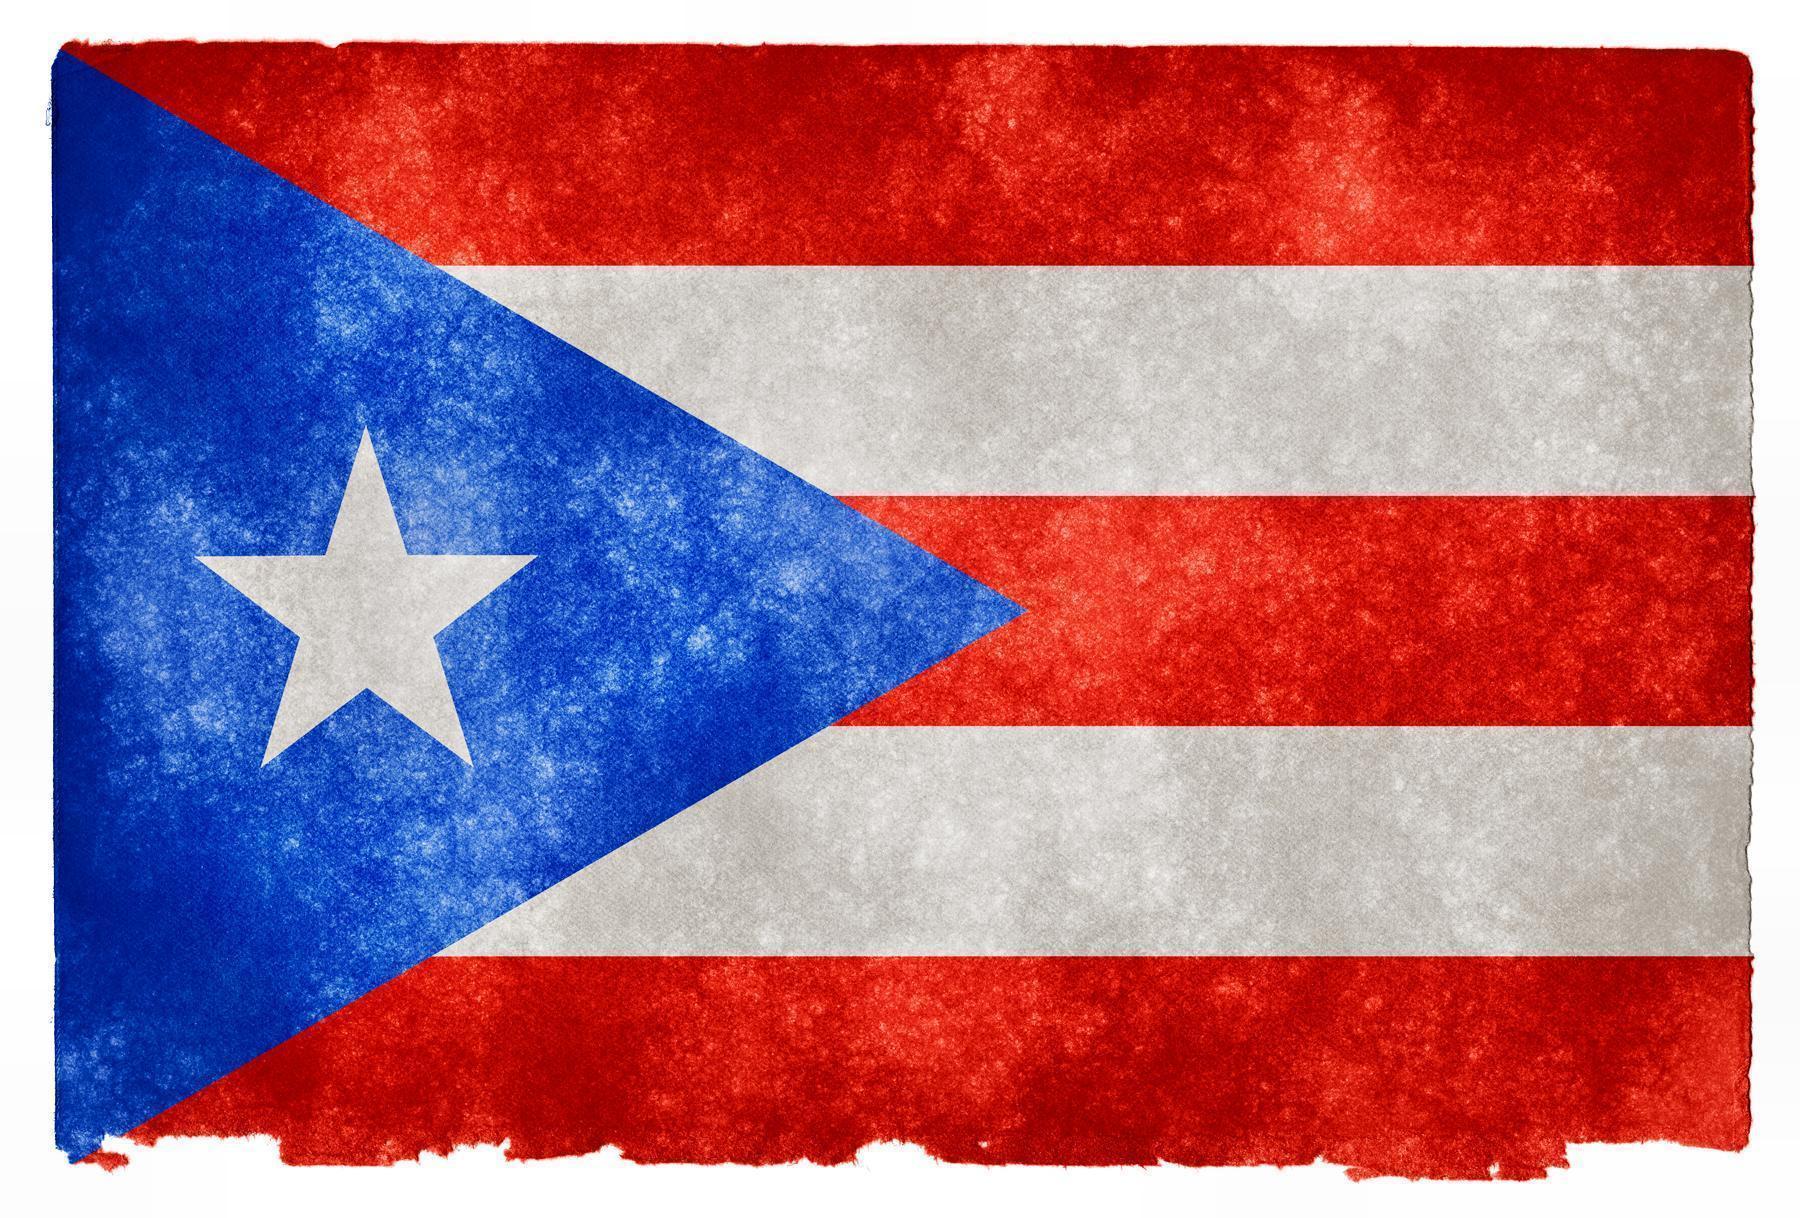 Puerto Rico Flag Wallpaper Image 20 High. Wallpaperiz